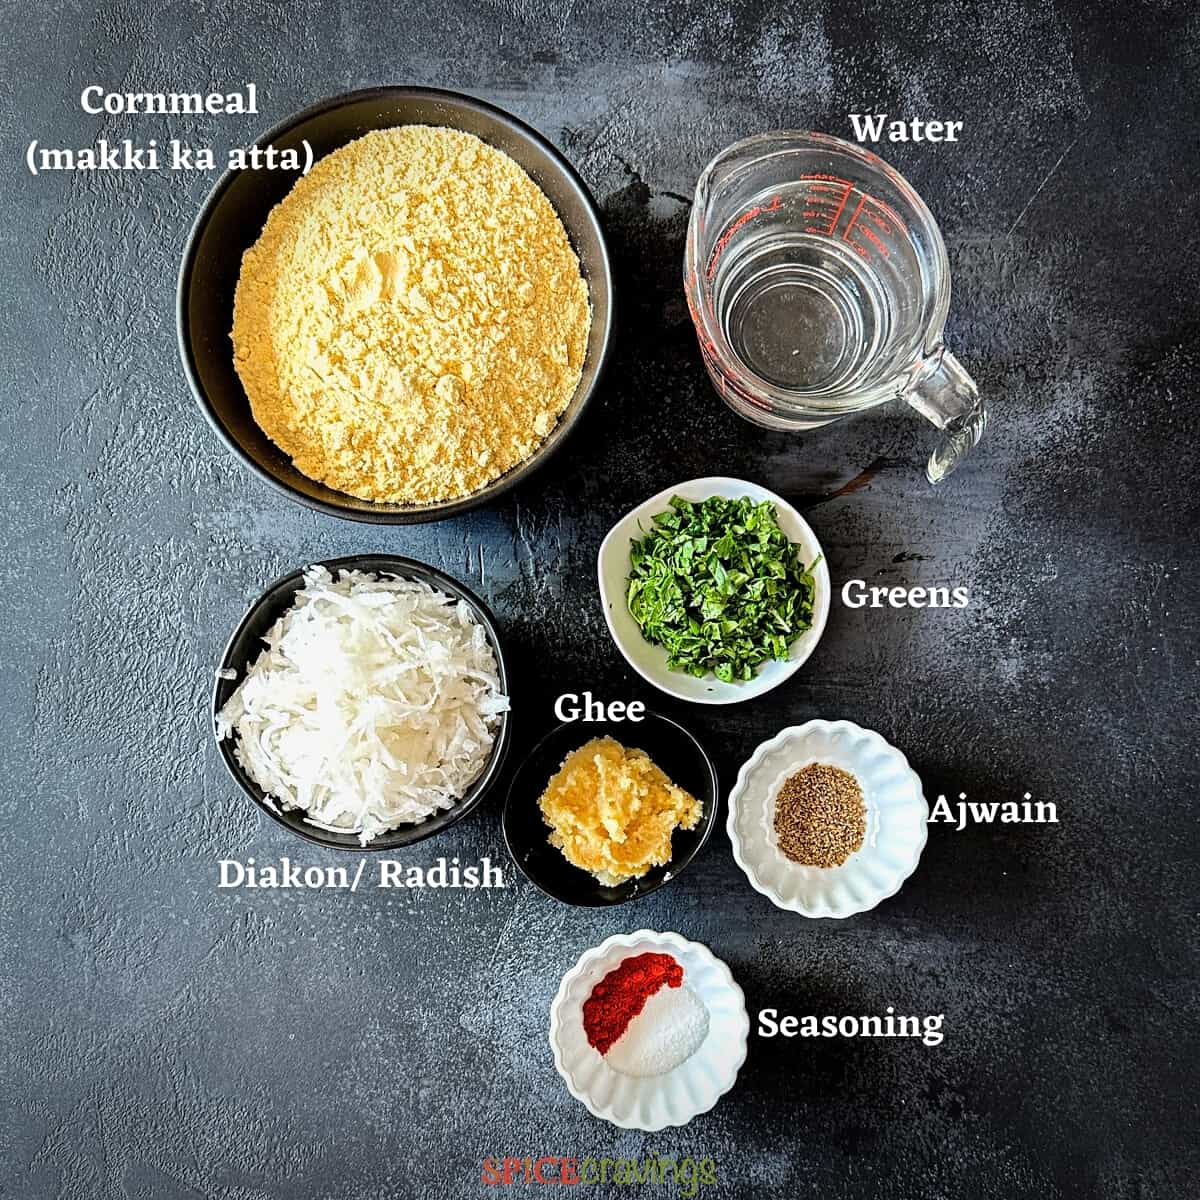 cornmeal, water, diakon, greens amond other ingredients on grey board